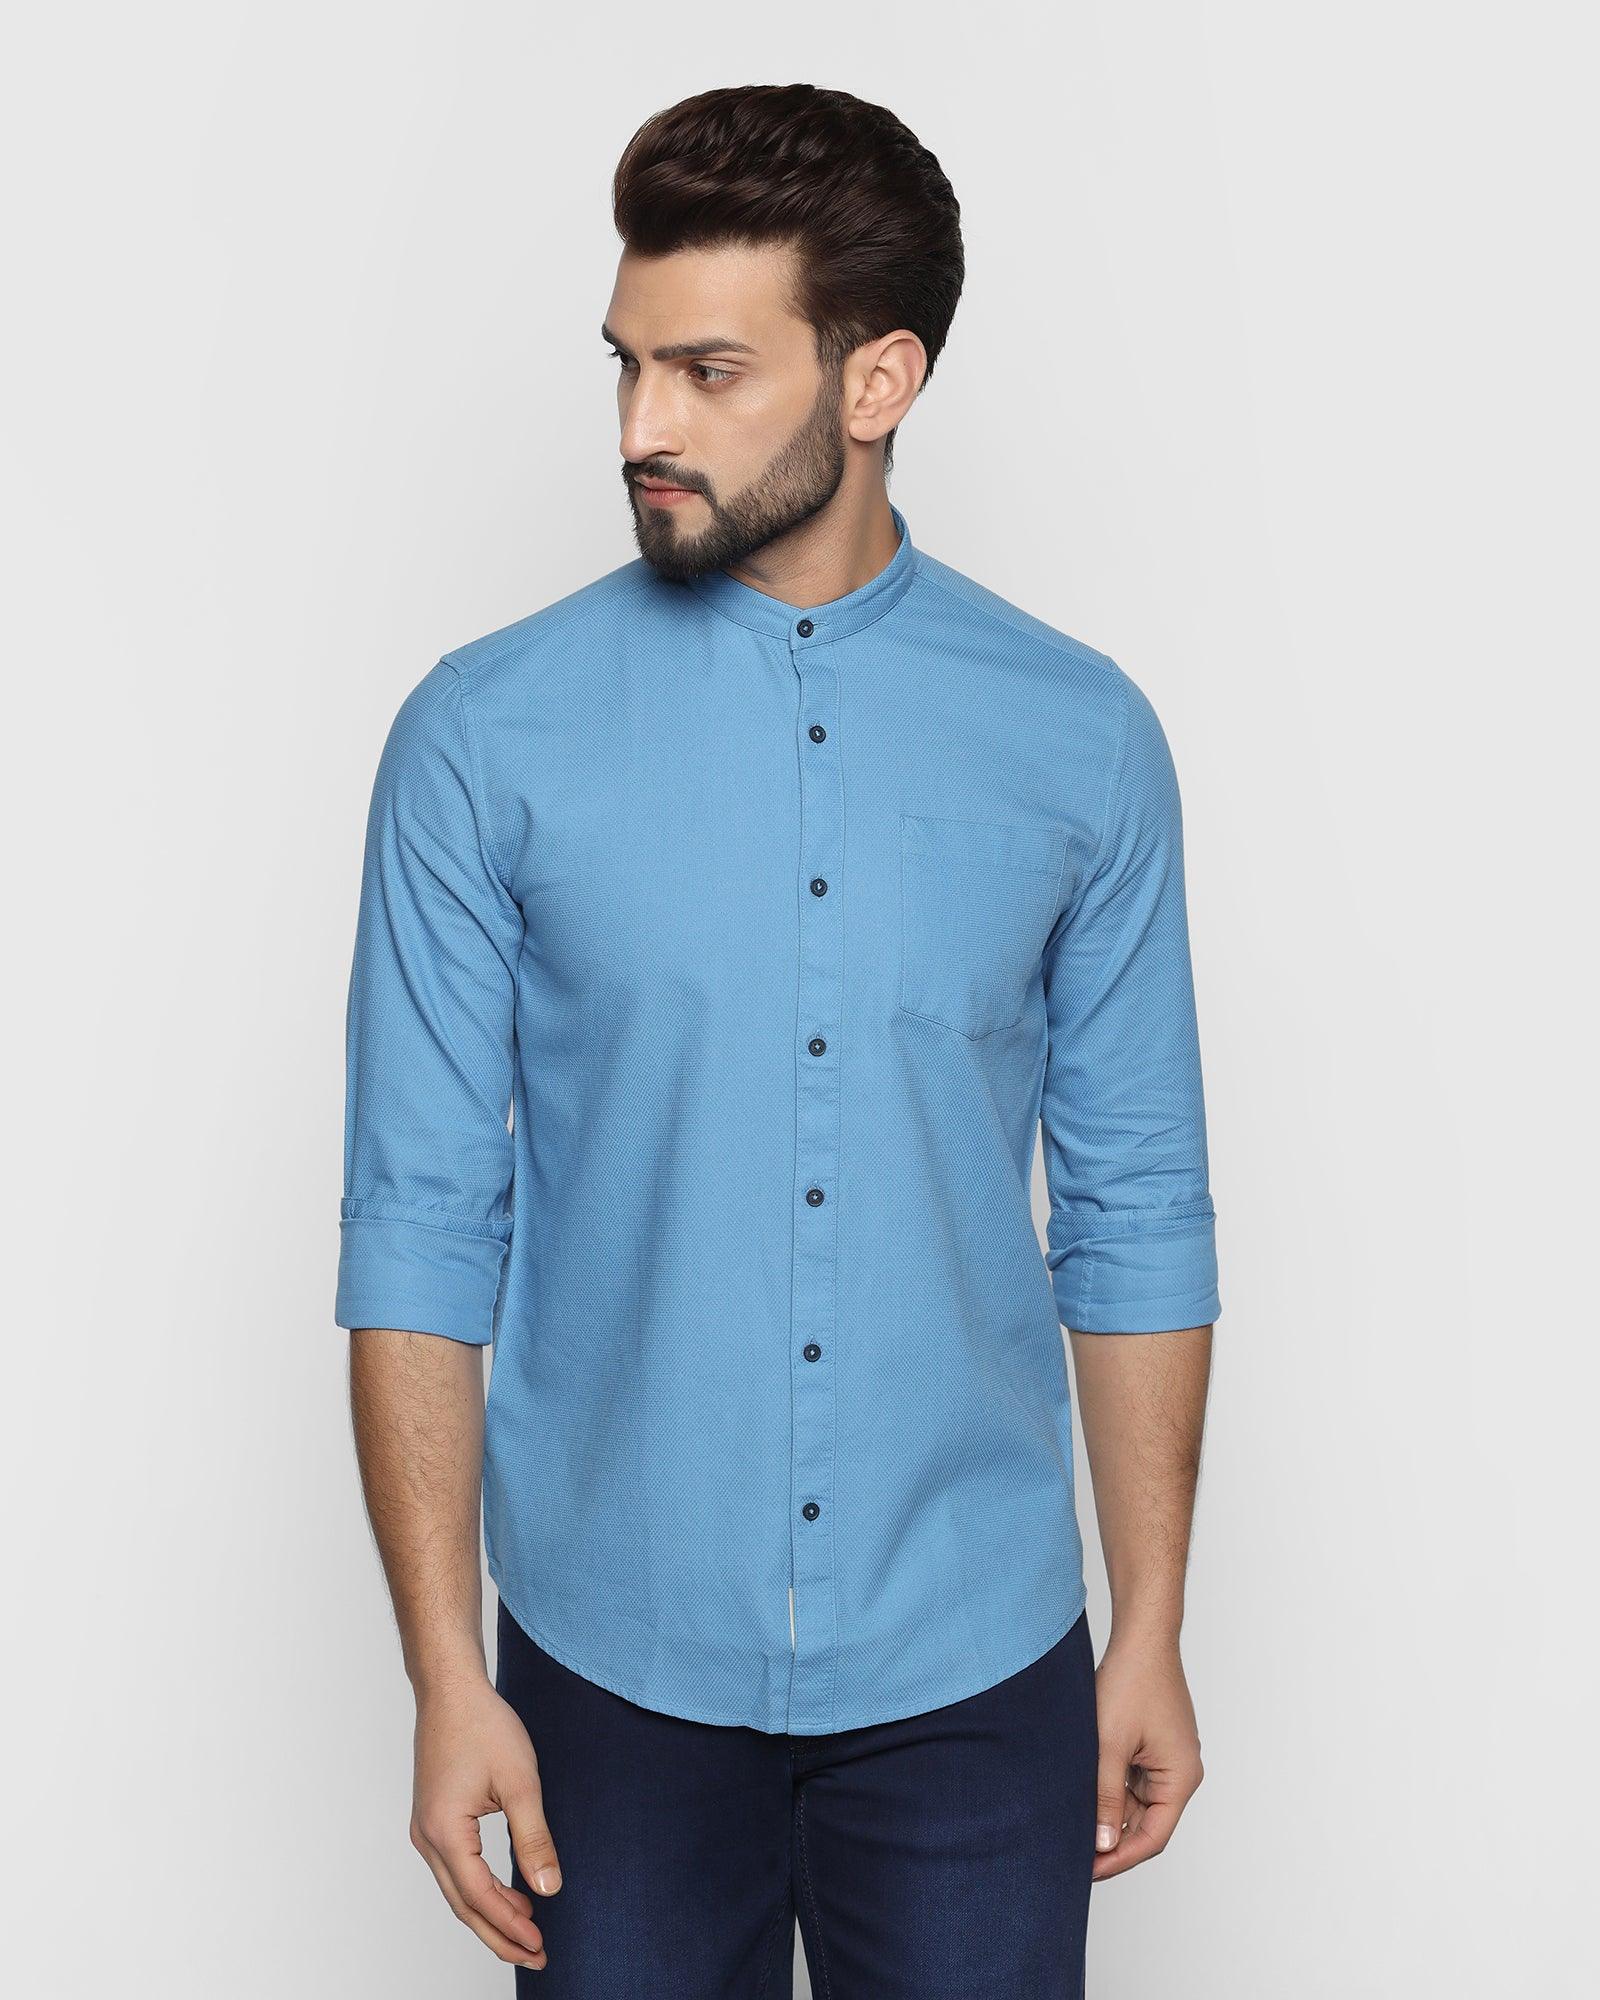 Casual Mid Blue Textured Shirt - Volt